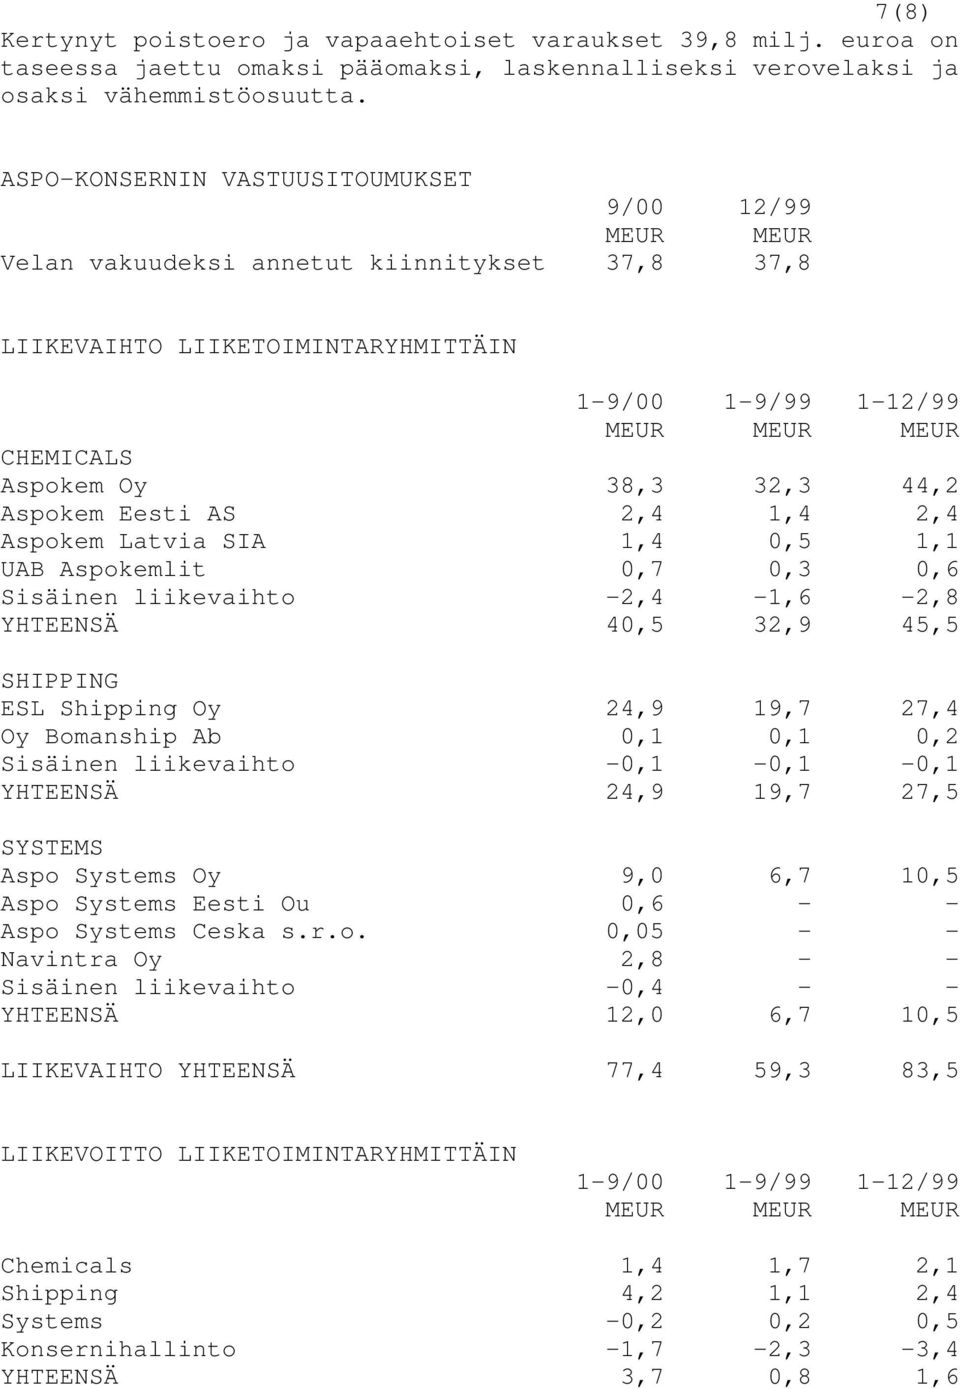 Eesti AS 2,4 1,4 2,4 Aspokem Latvia SIA 1,4 0,5 1,1 UAB Aspokemlit 0,7 0,3 0,6 Sisäinen liikevaihto -2,4-1,6-2,8 YHTEENSÄ 40,5 32,9 45,5 SHIPPING ESL Shipping Oy 24,9 19,7 27,4 Oy Bomanship Ab 0,1